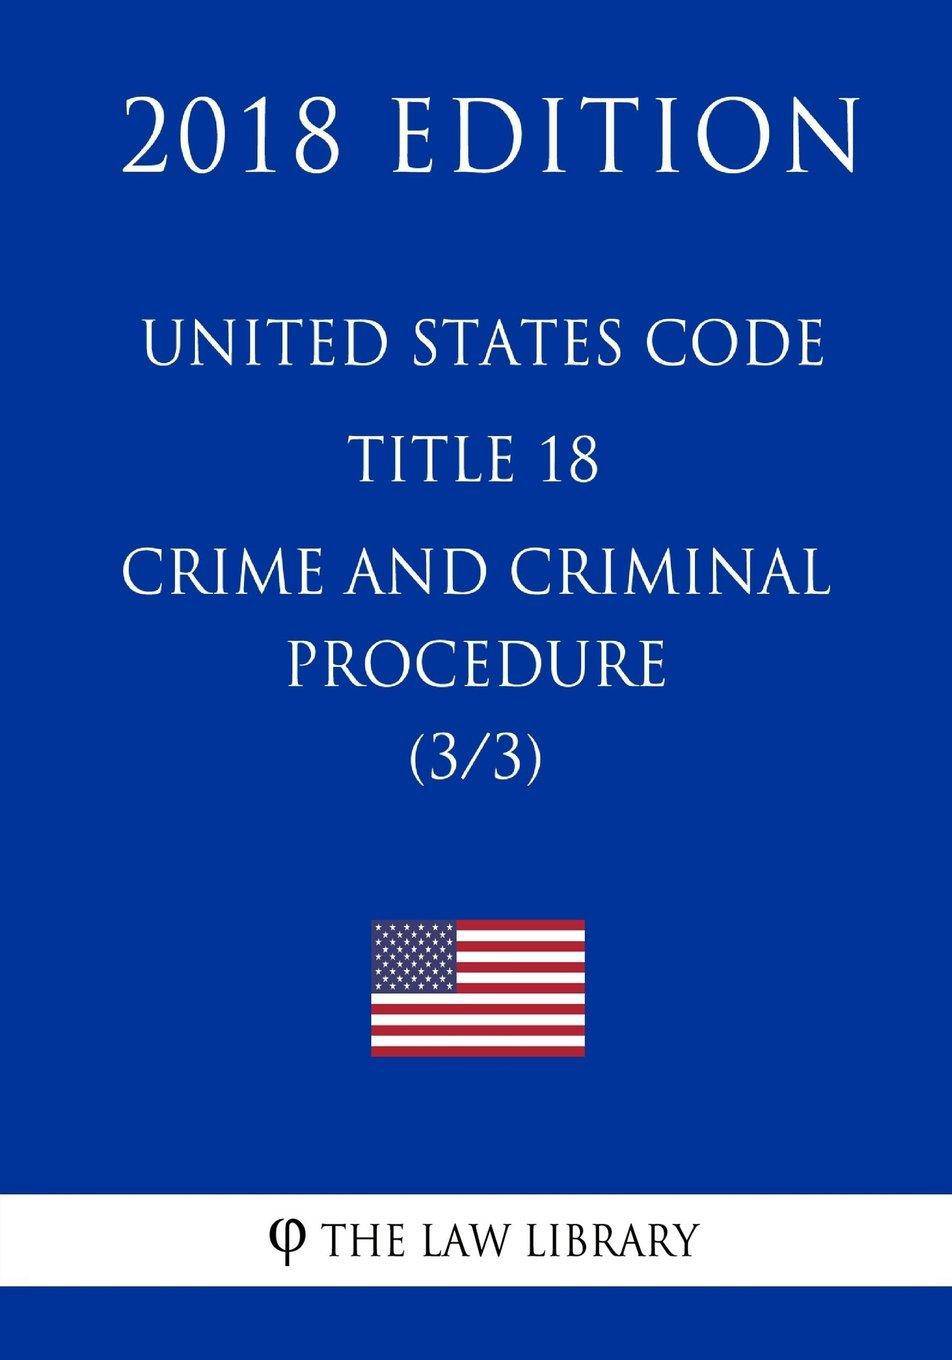 United States Code - Title 18 - Crimes and Criminal Procedure (3/3) (2018 Edition) - SureShot Books Publishing LLC